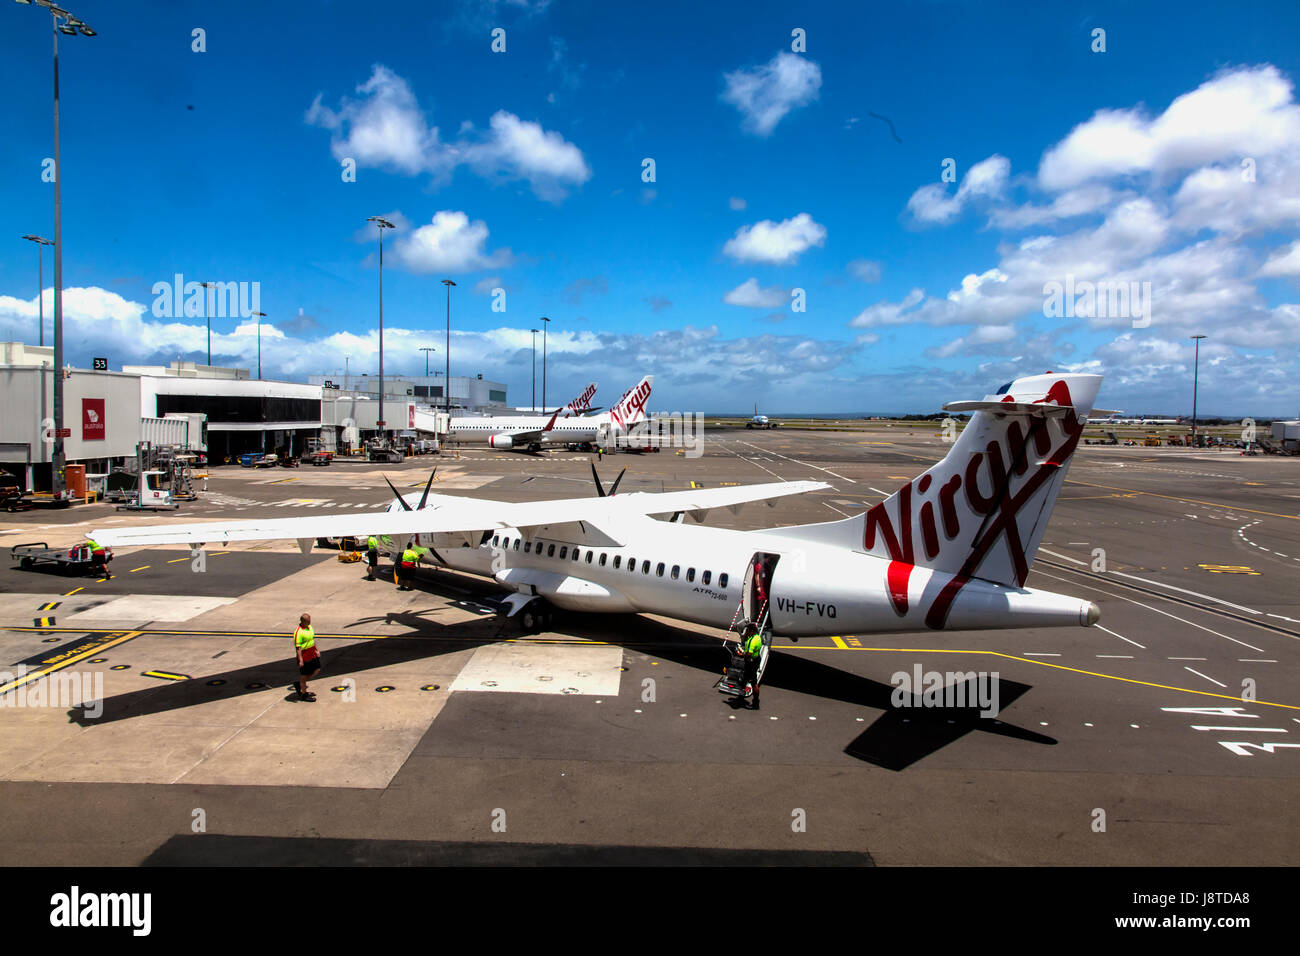 Virgin Australia ground staff working on jet prior to take-off at Sydney Airport Stock Photo